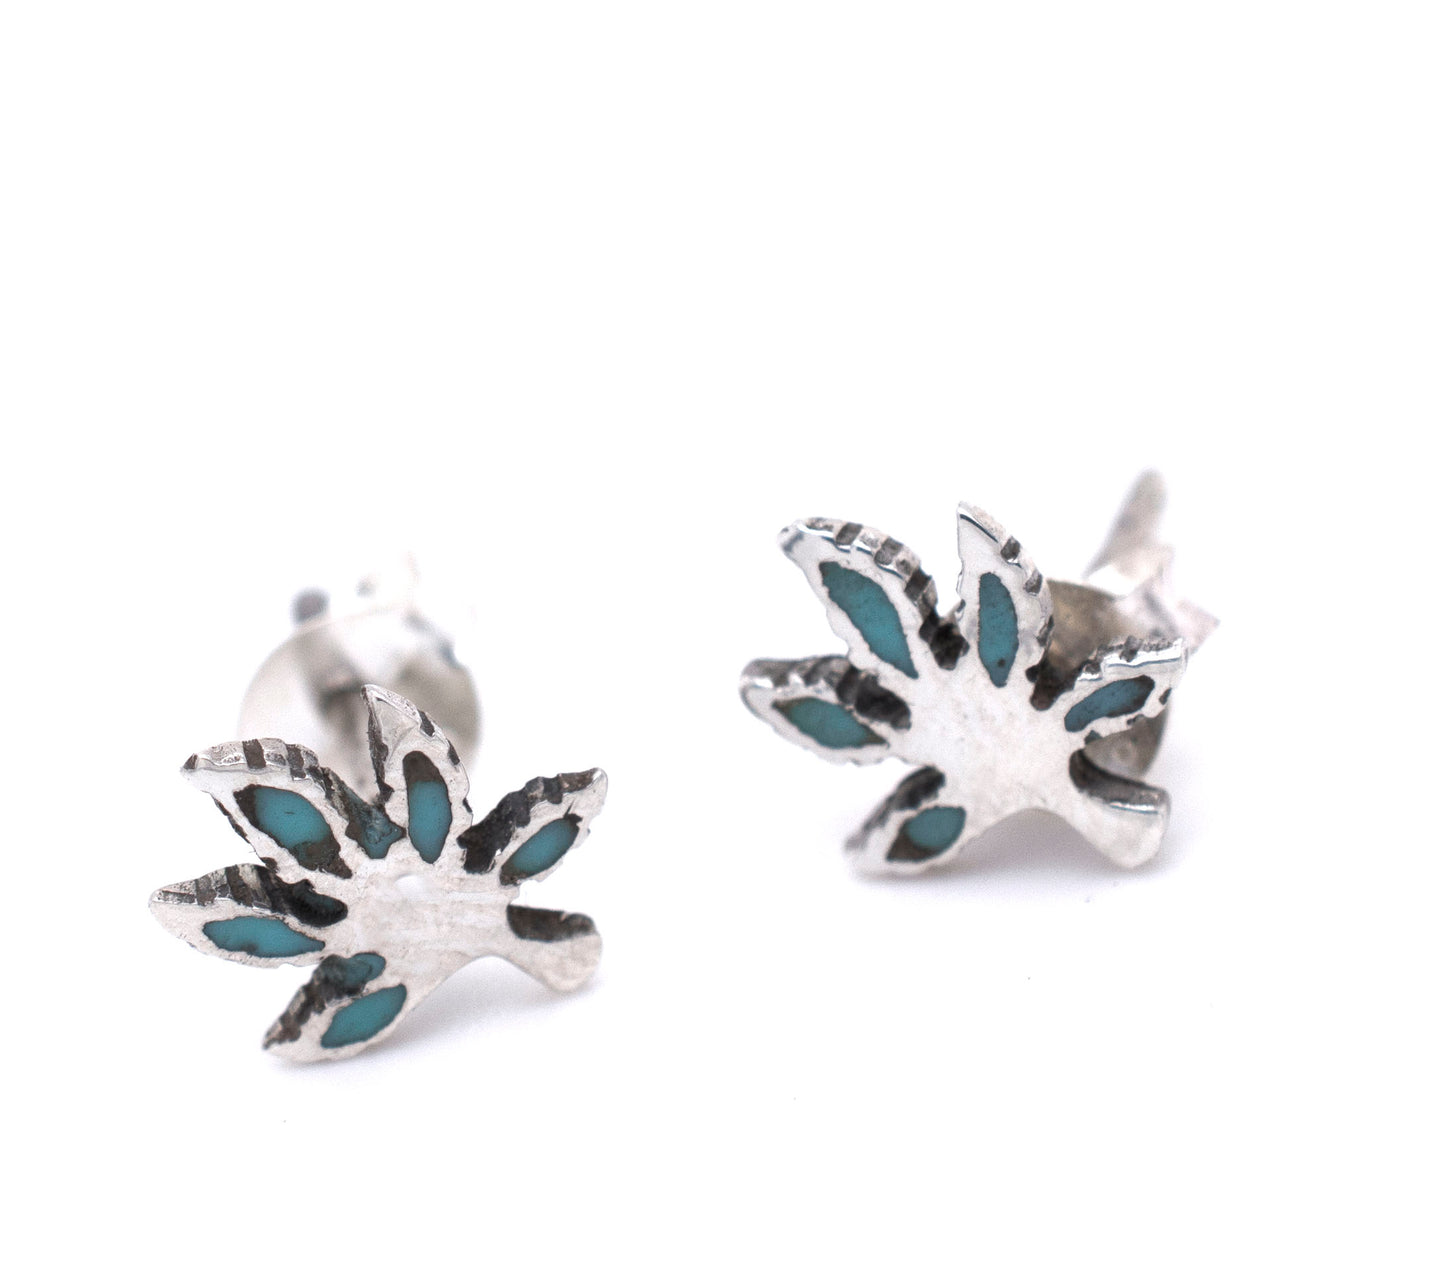 A pair of Super Silver turquoise leaf stud earrings featuring a subtle marijuana leaf design.